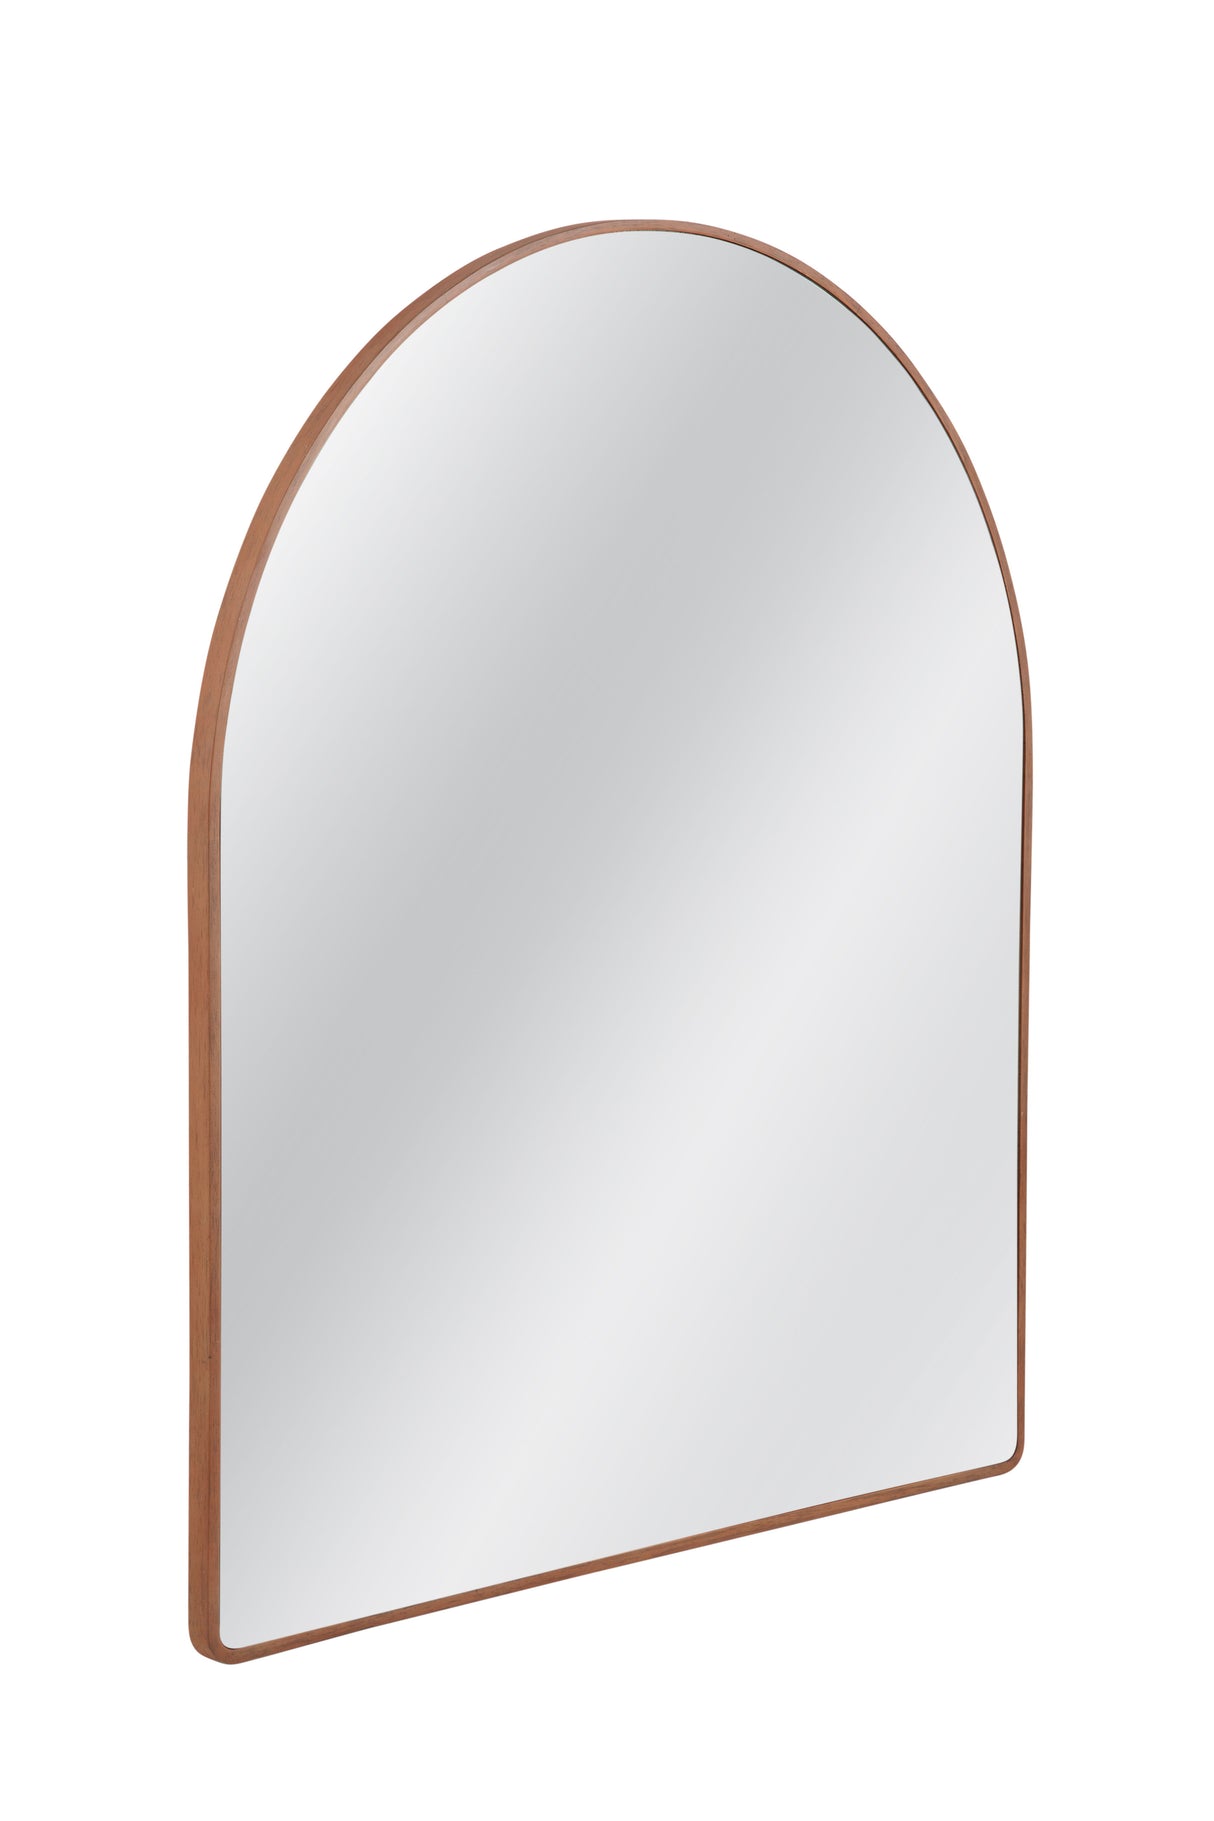 Hazel - Arched Mantel Mirror - Light Brown